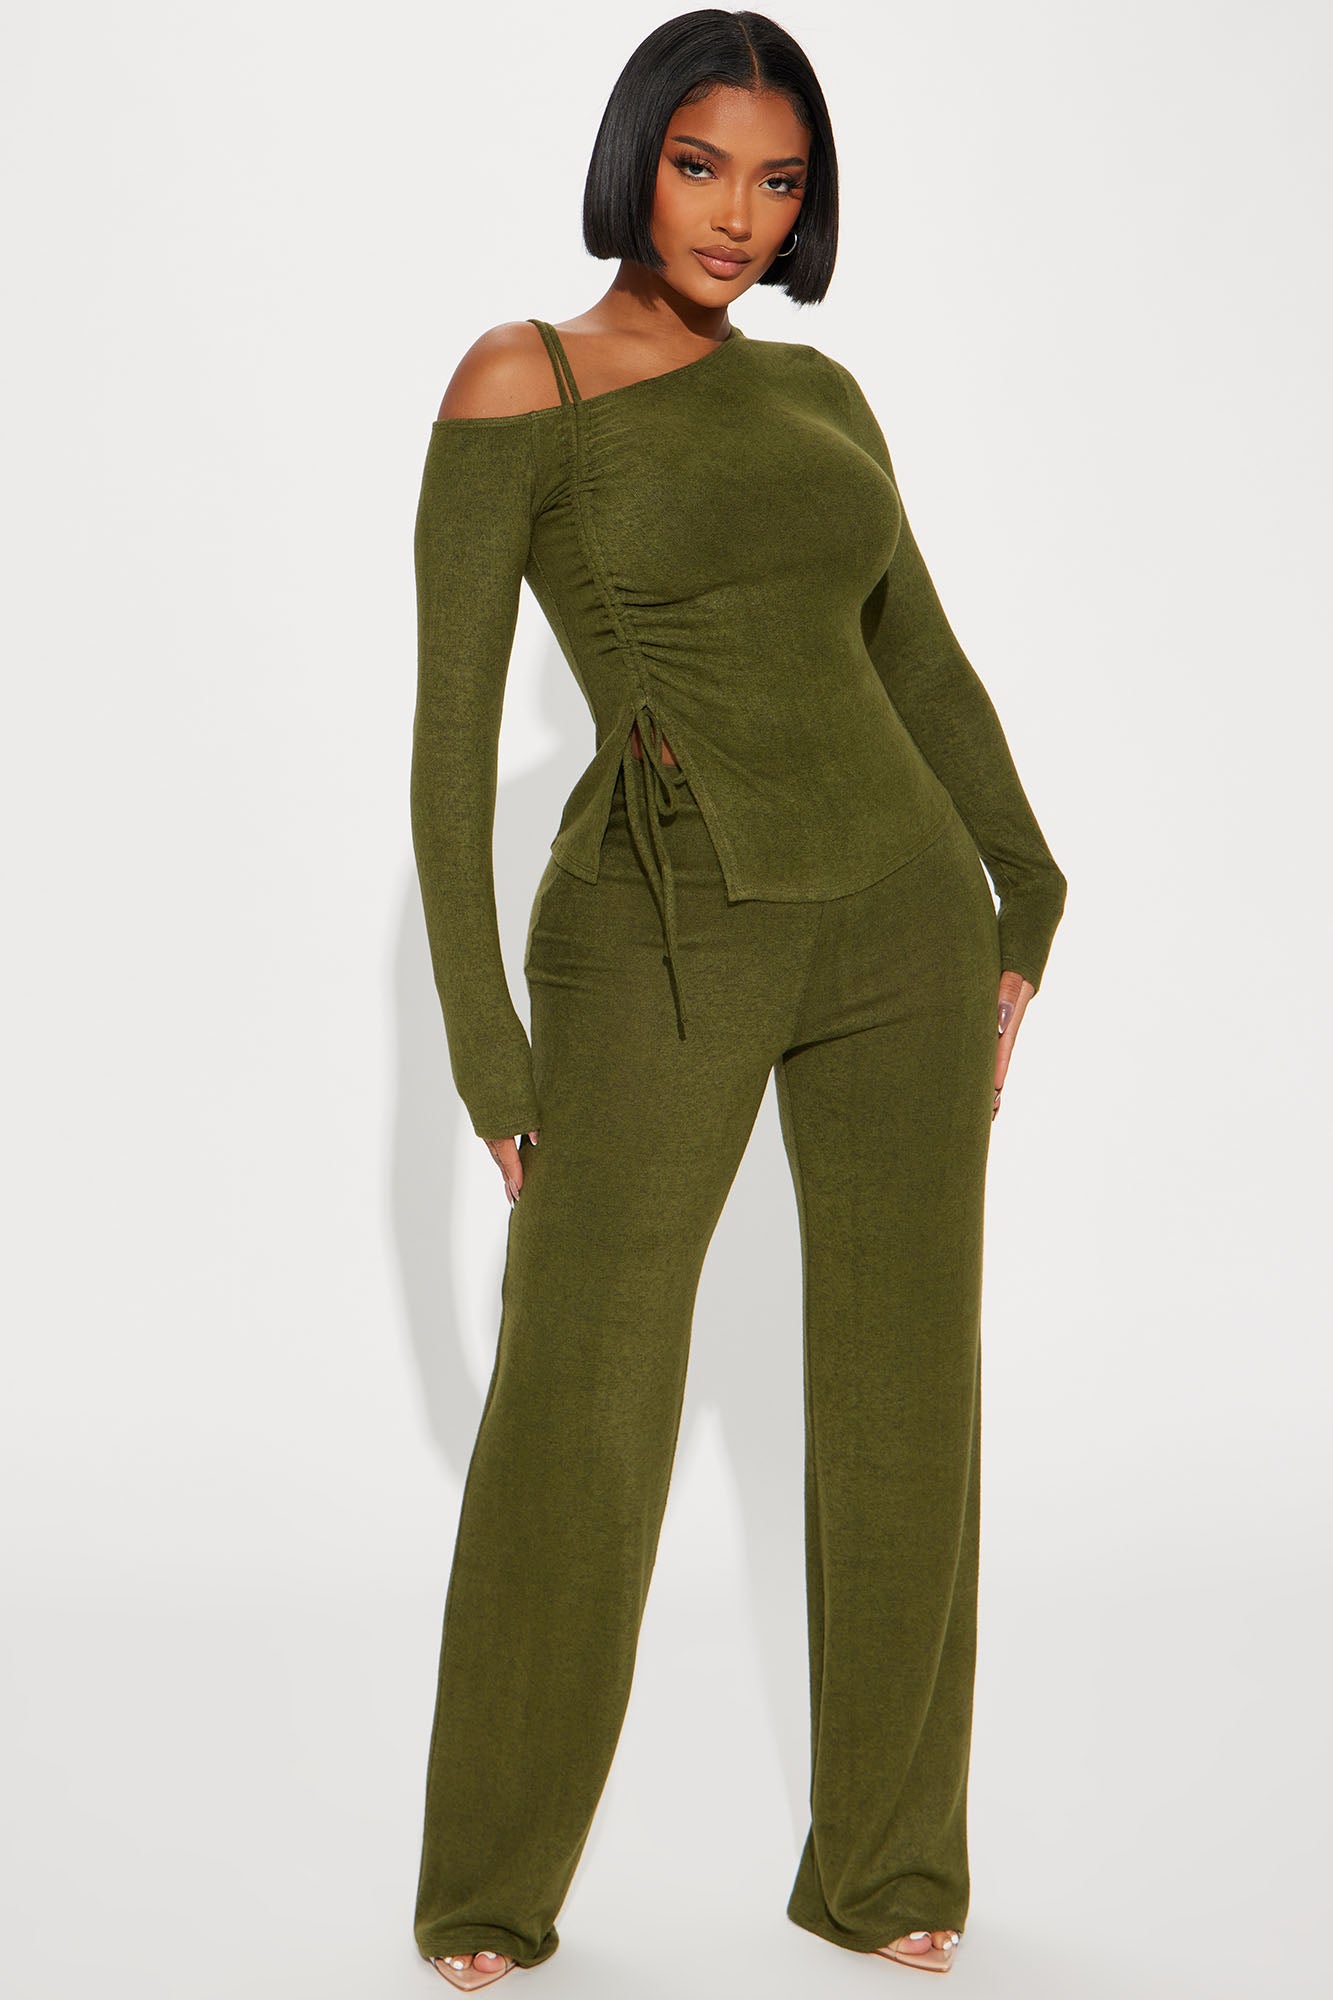 Another Dream Pant Set - Olive, Fashion Nova, Matching Sets